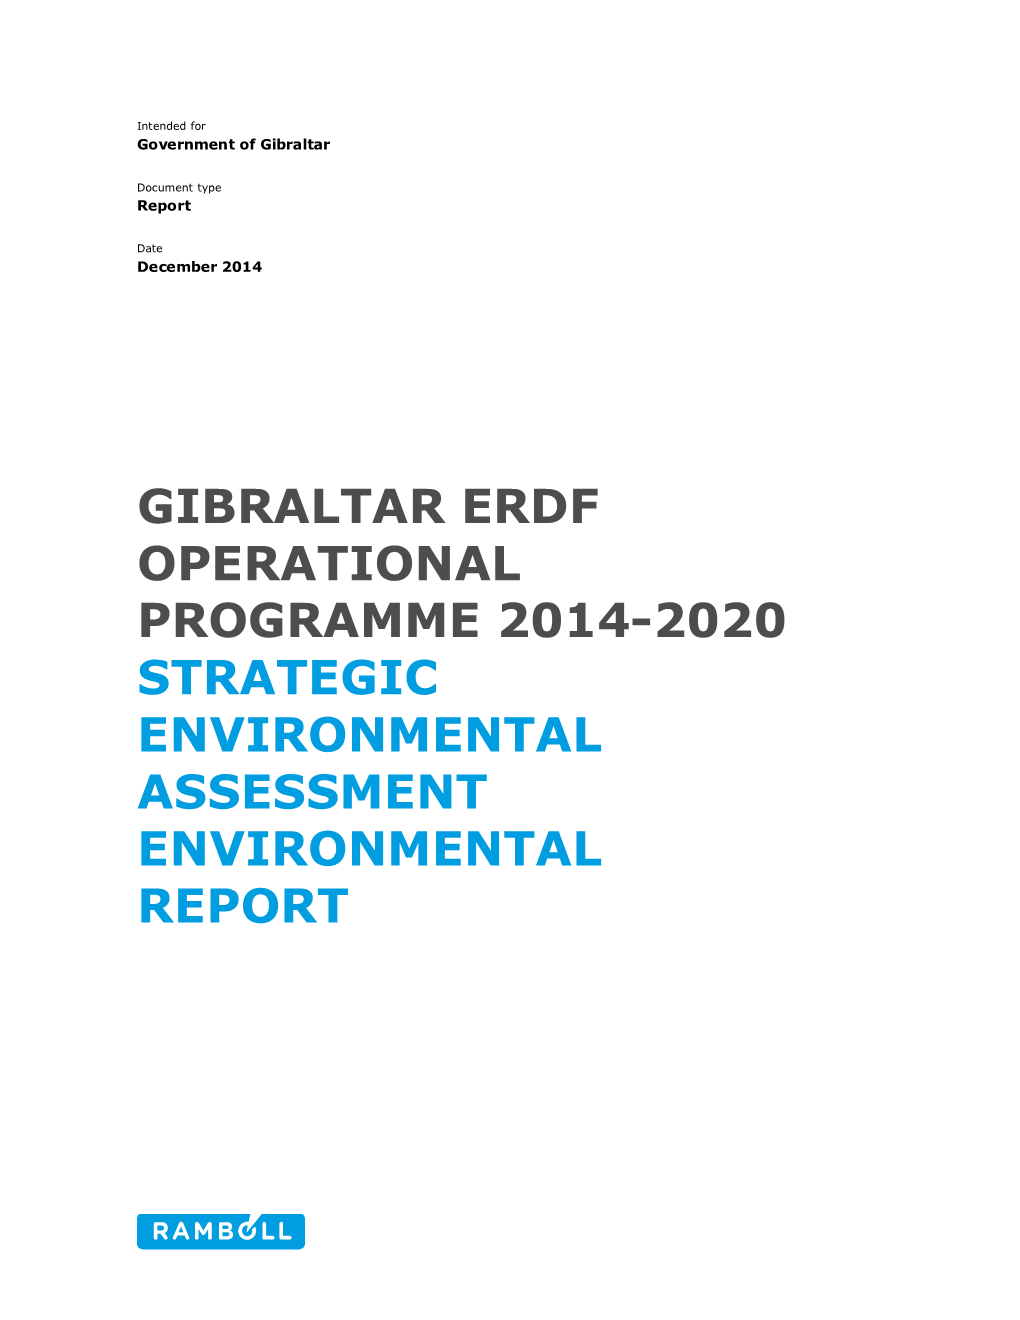 Gibraltar Erdf Operational Programme 2014-2020 Strategic Environmental Assessment Environmental Report